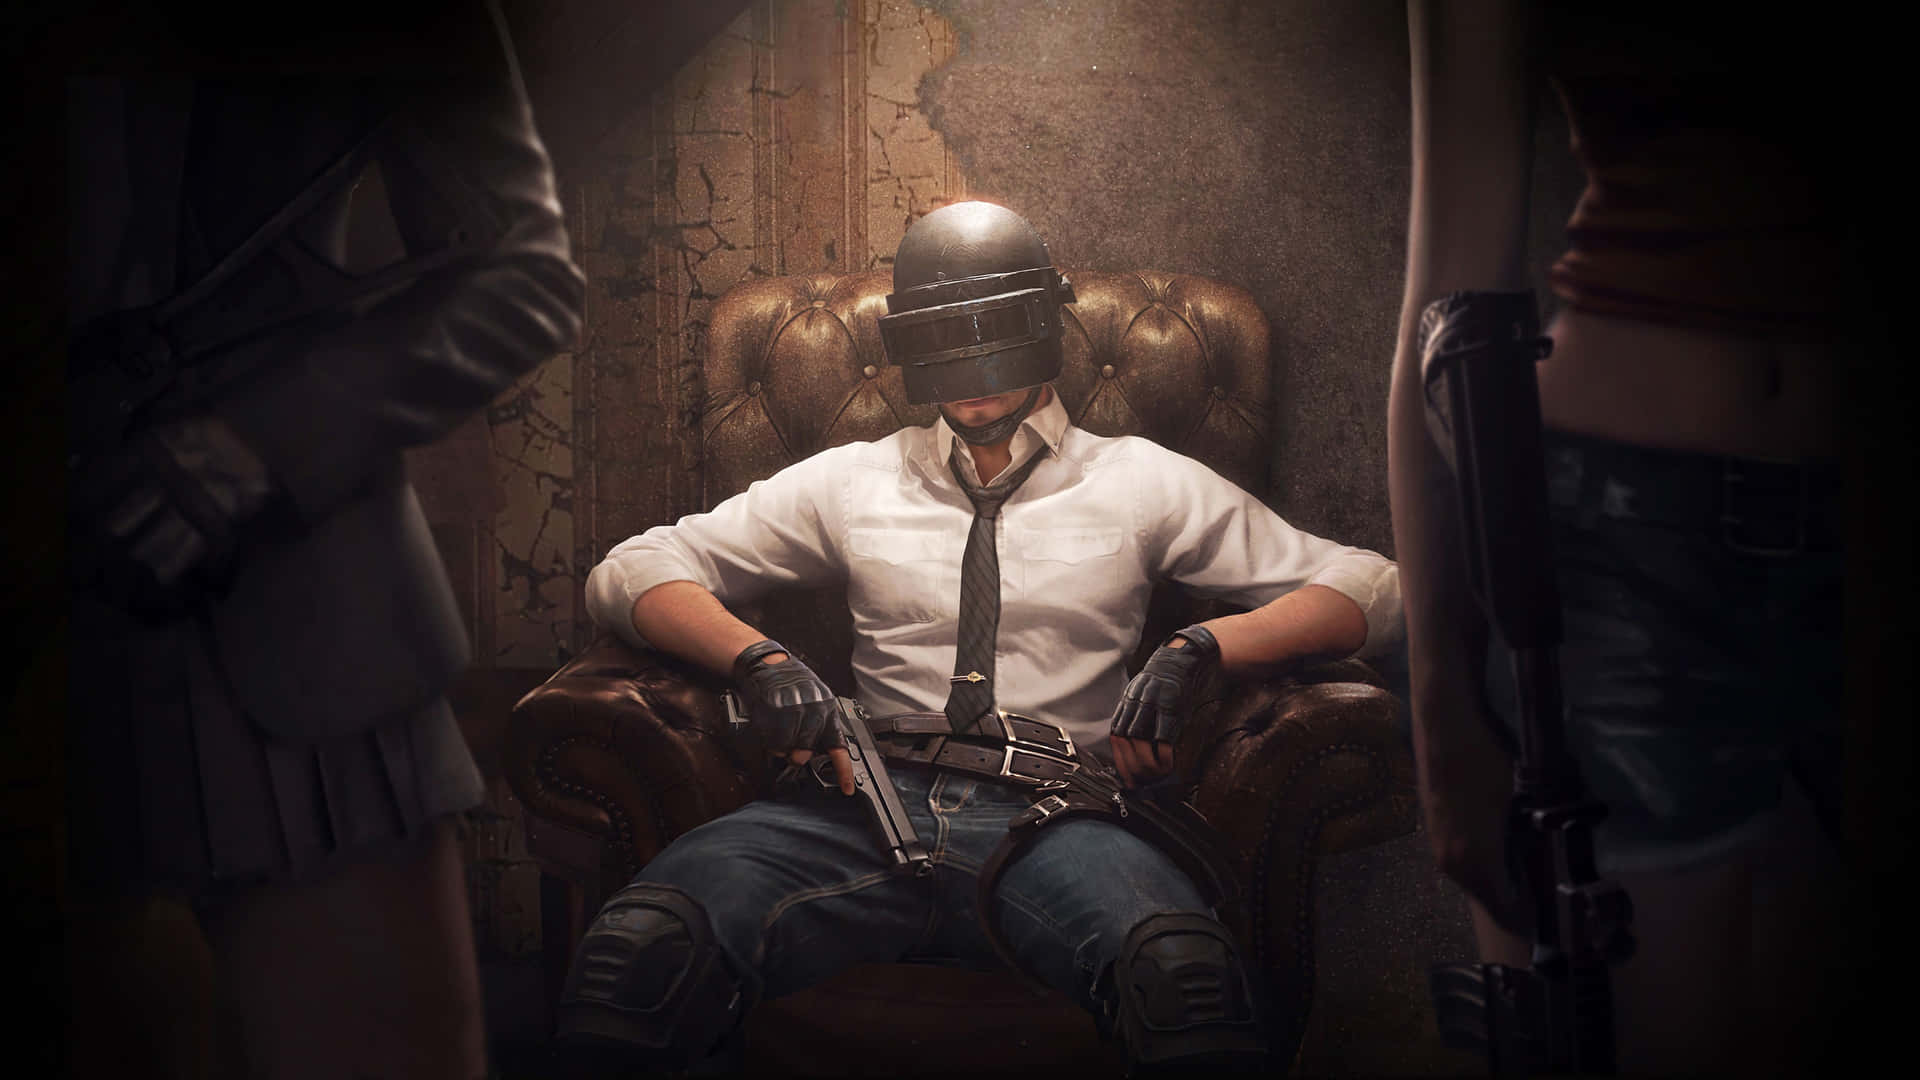 Pubg Mobile - A Man Sitting In A Chair With Guns